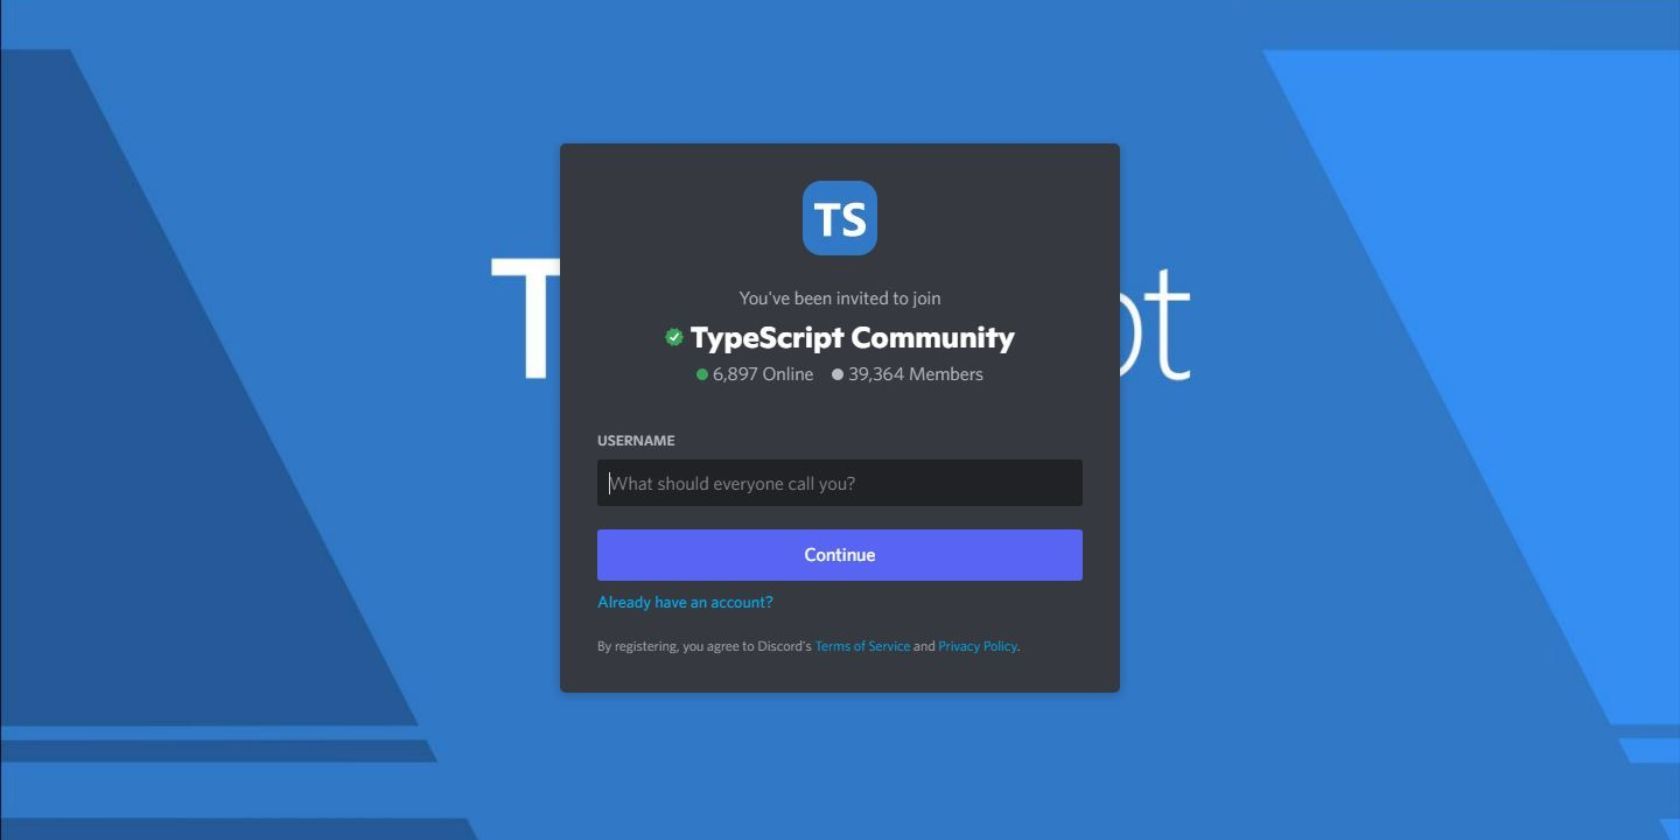 A screenshot of Typescript Community's invite page